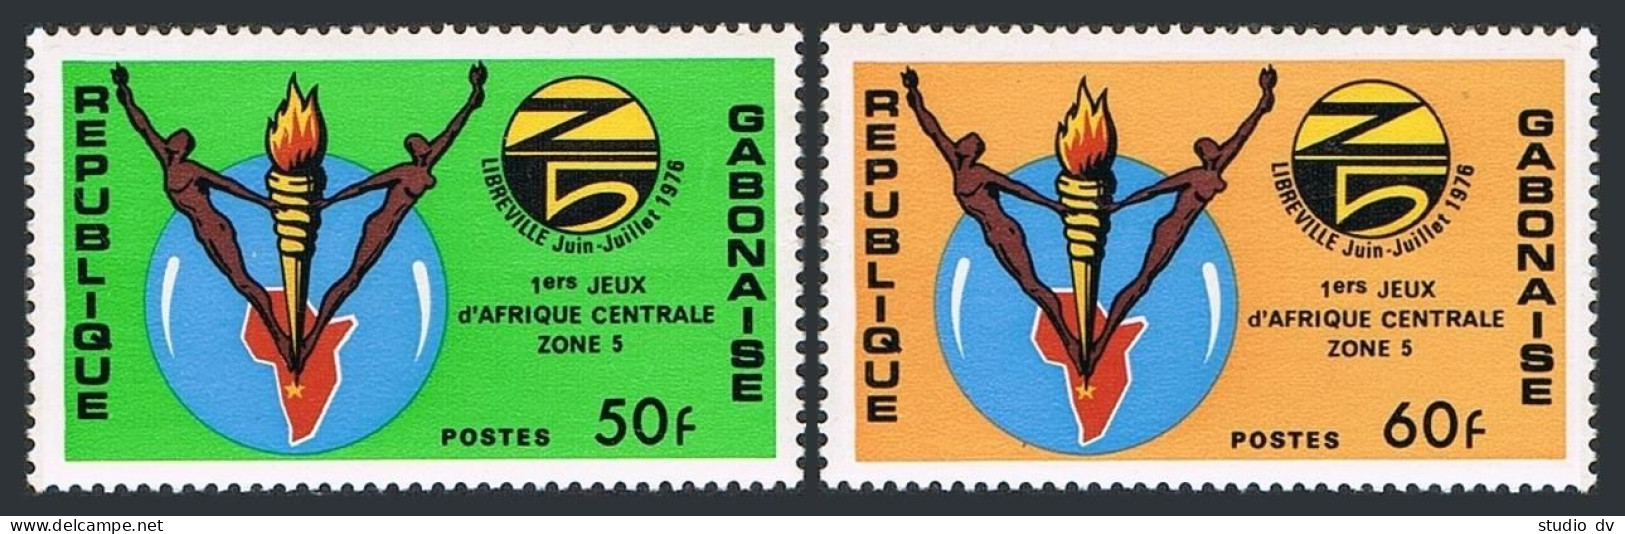 Gabon 365-366,MNH.Michel 592-593. 1st Central African Games, Libreville,1976. - Gabon